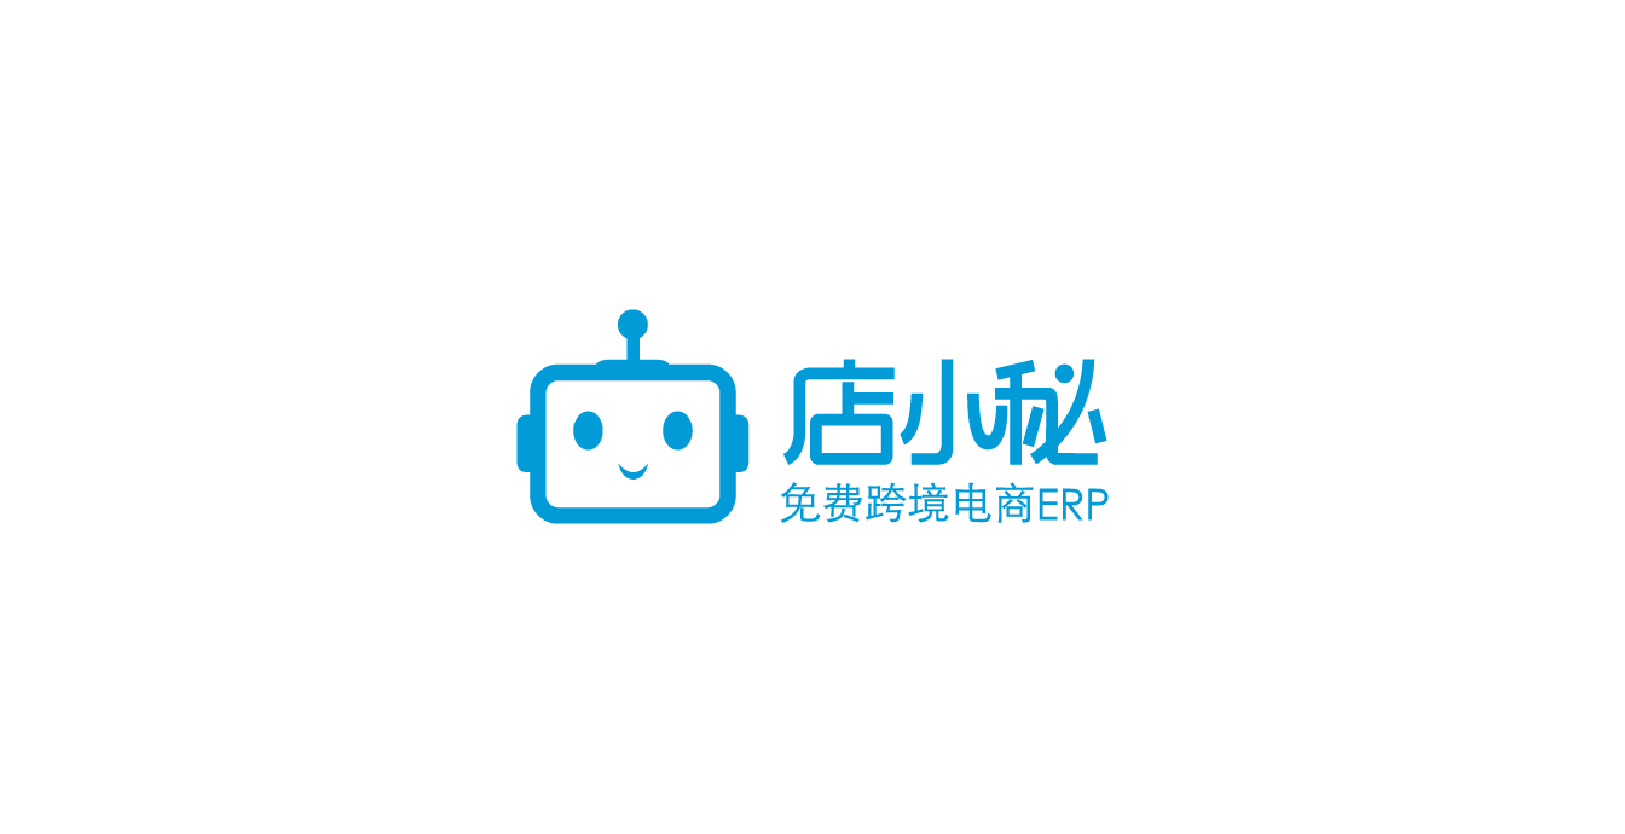 Vision Fund investment portfolio company Dianxiaomi's logo